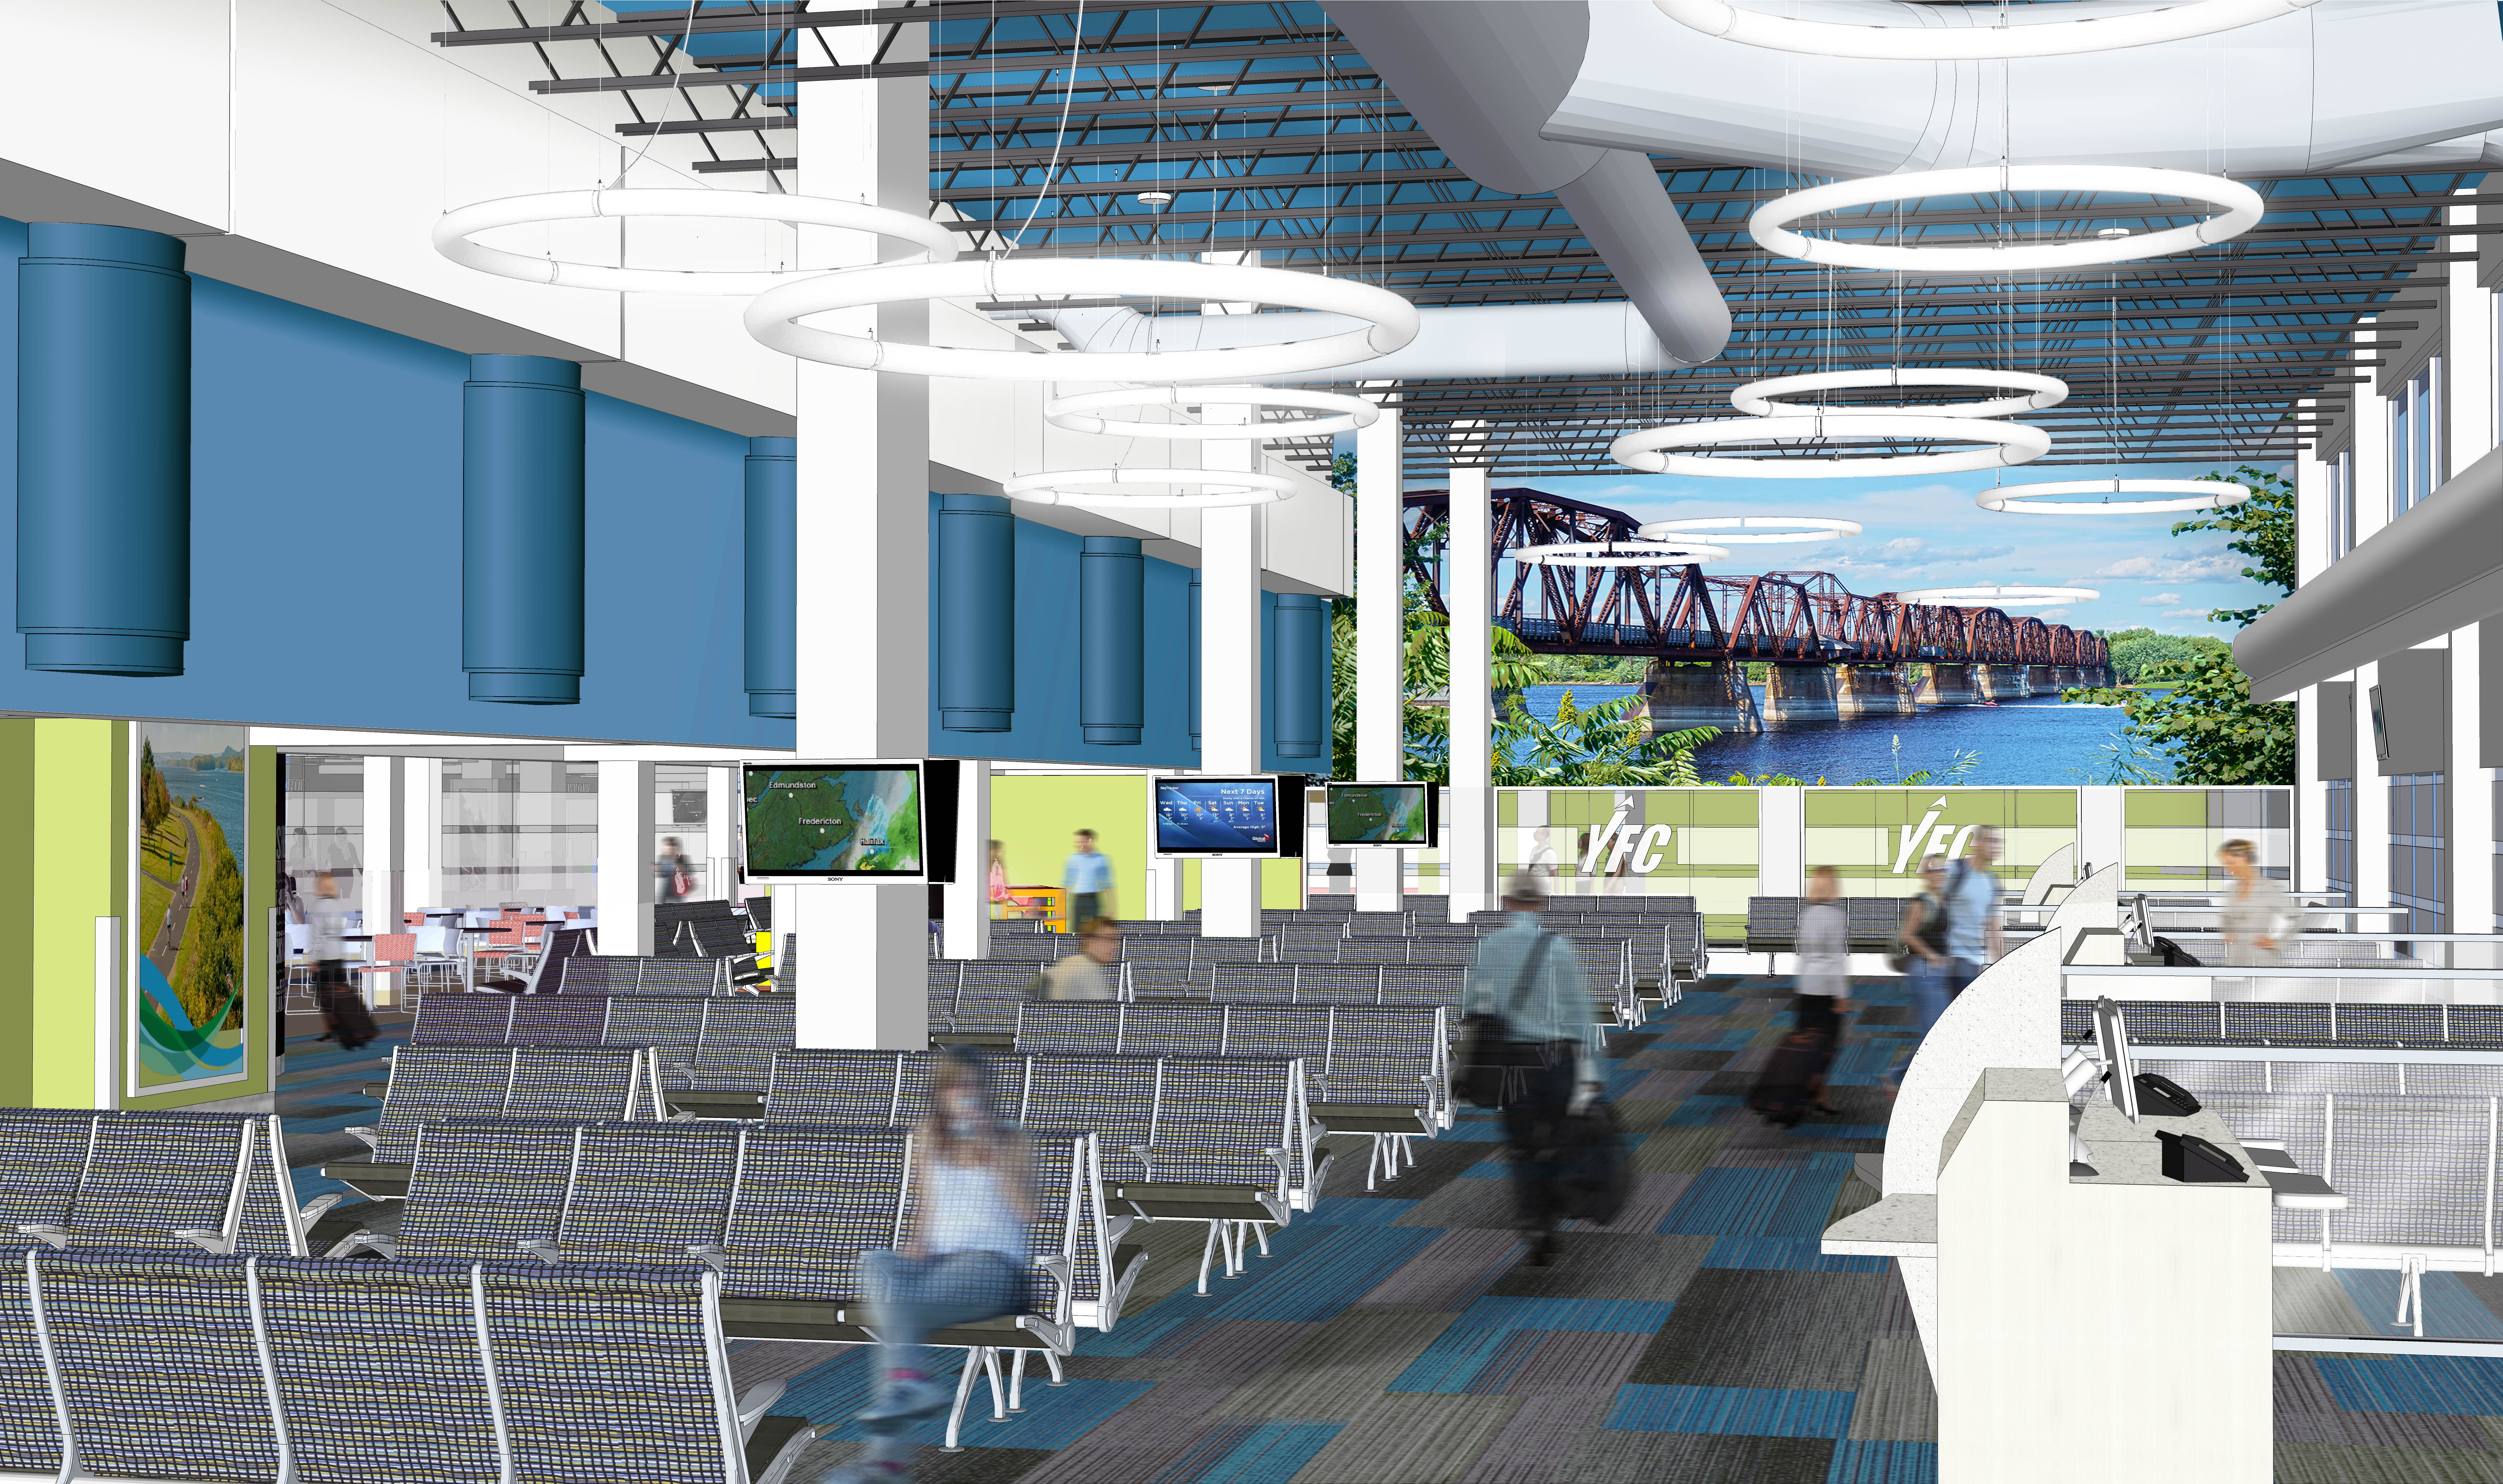 YFC Terminal Expansion - architecht's rendering departures lounge